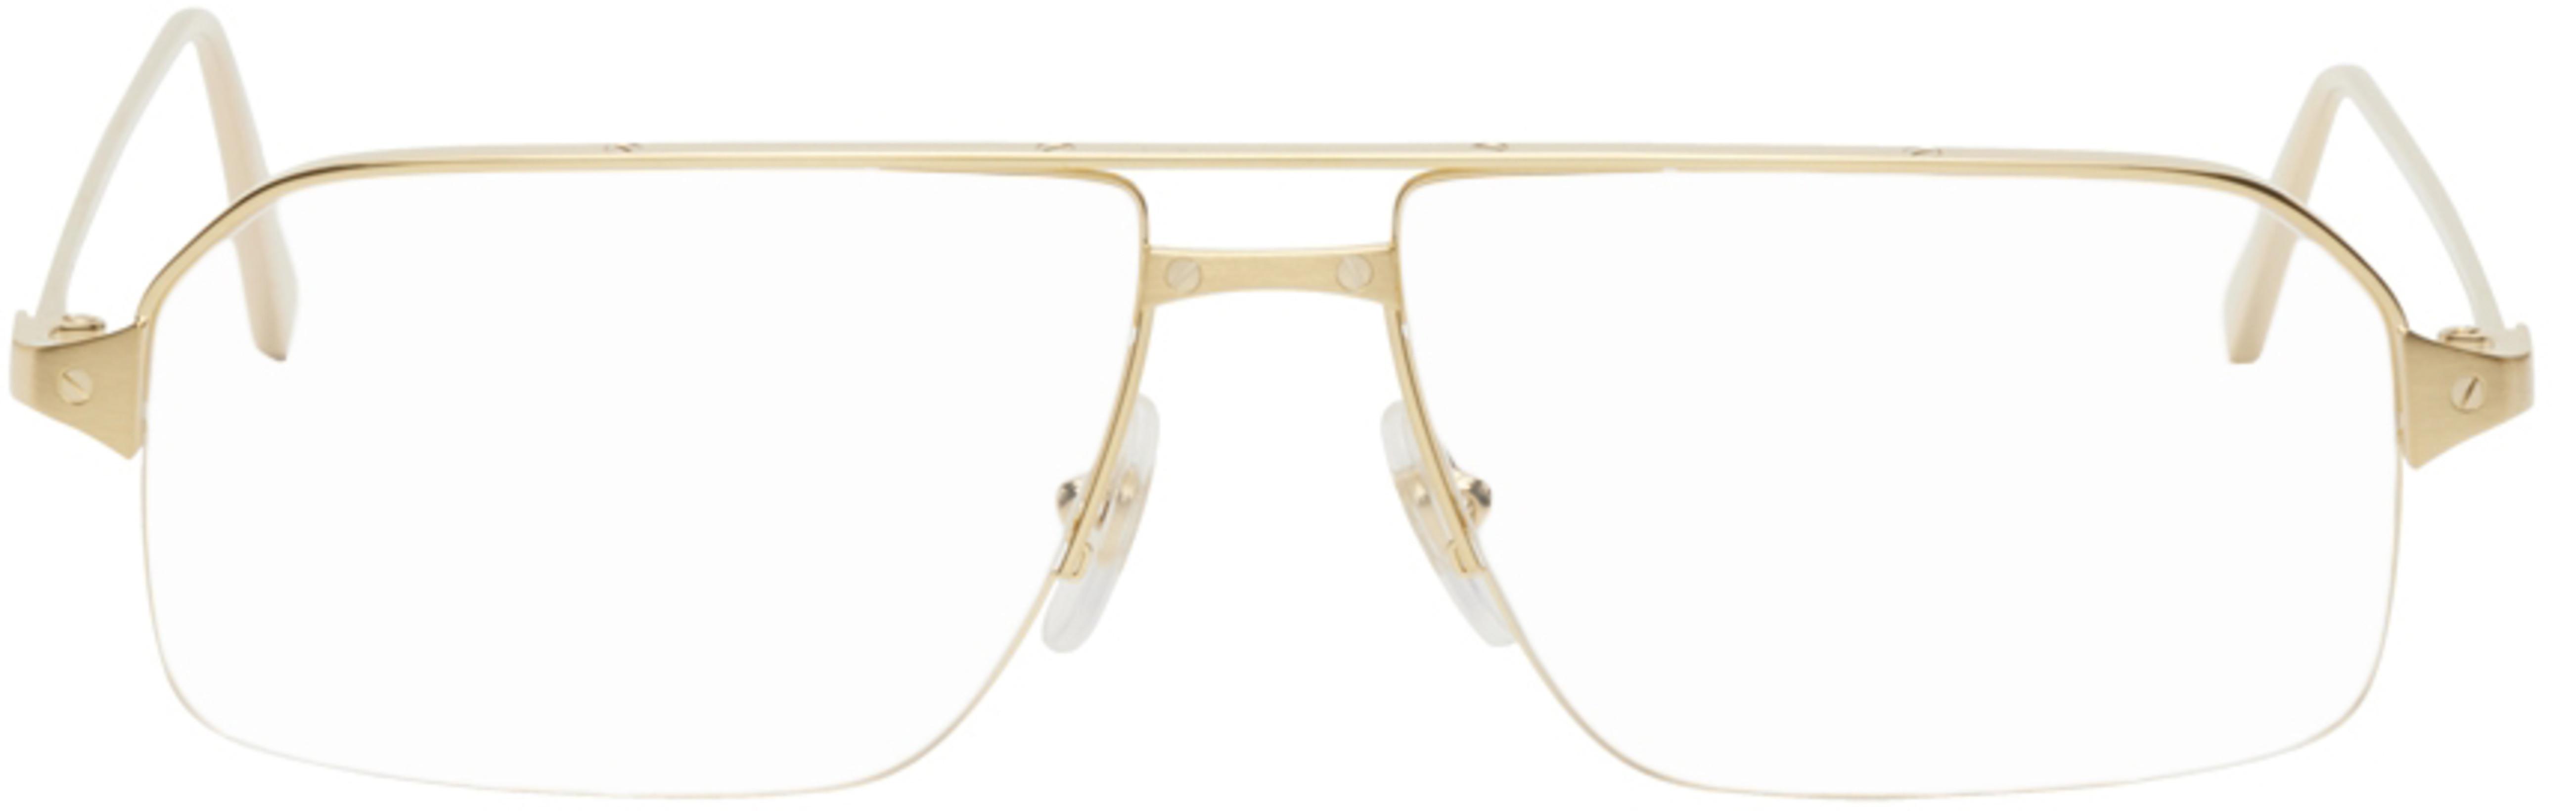 Gold Half-Rim Aviator Glasses by CARTIER